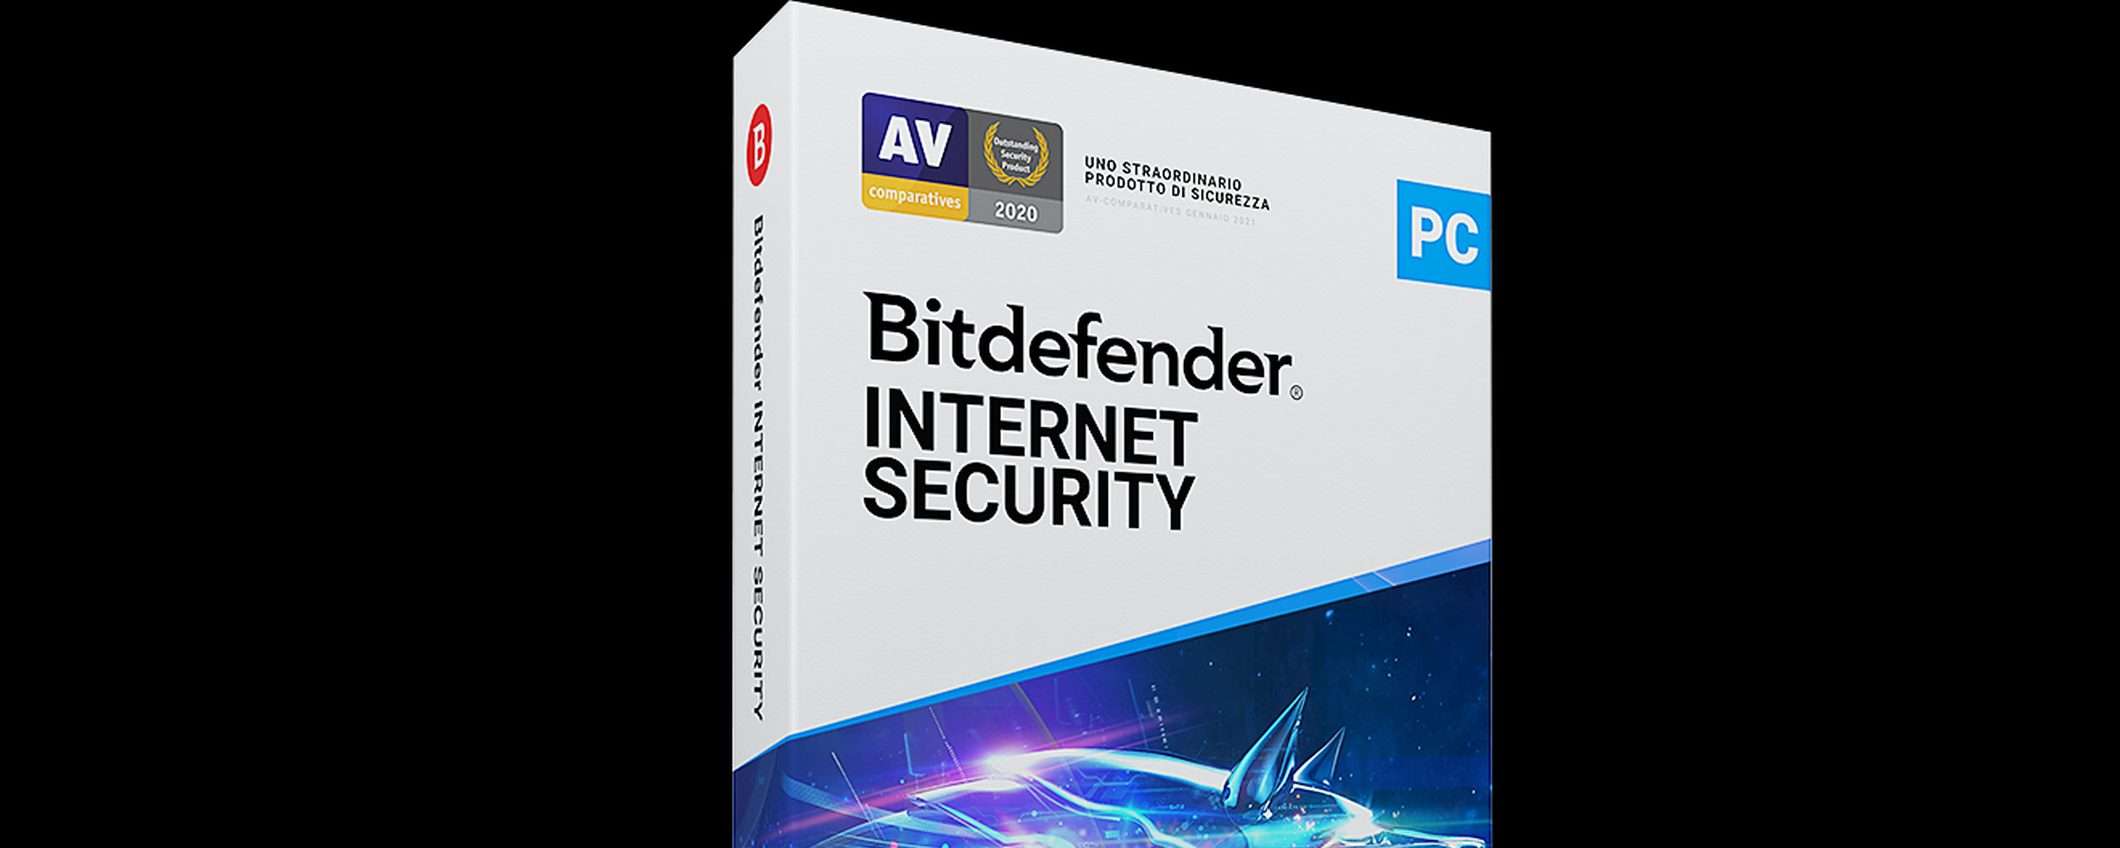 Bitdefender Internet Security: sconto fino al 60%